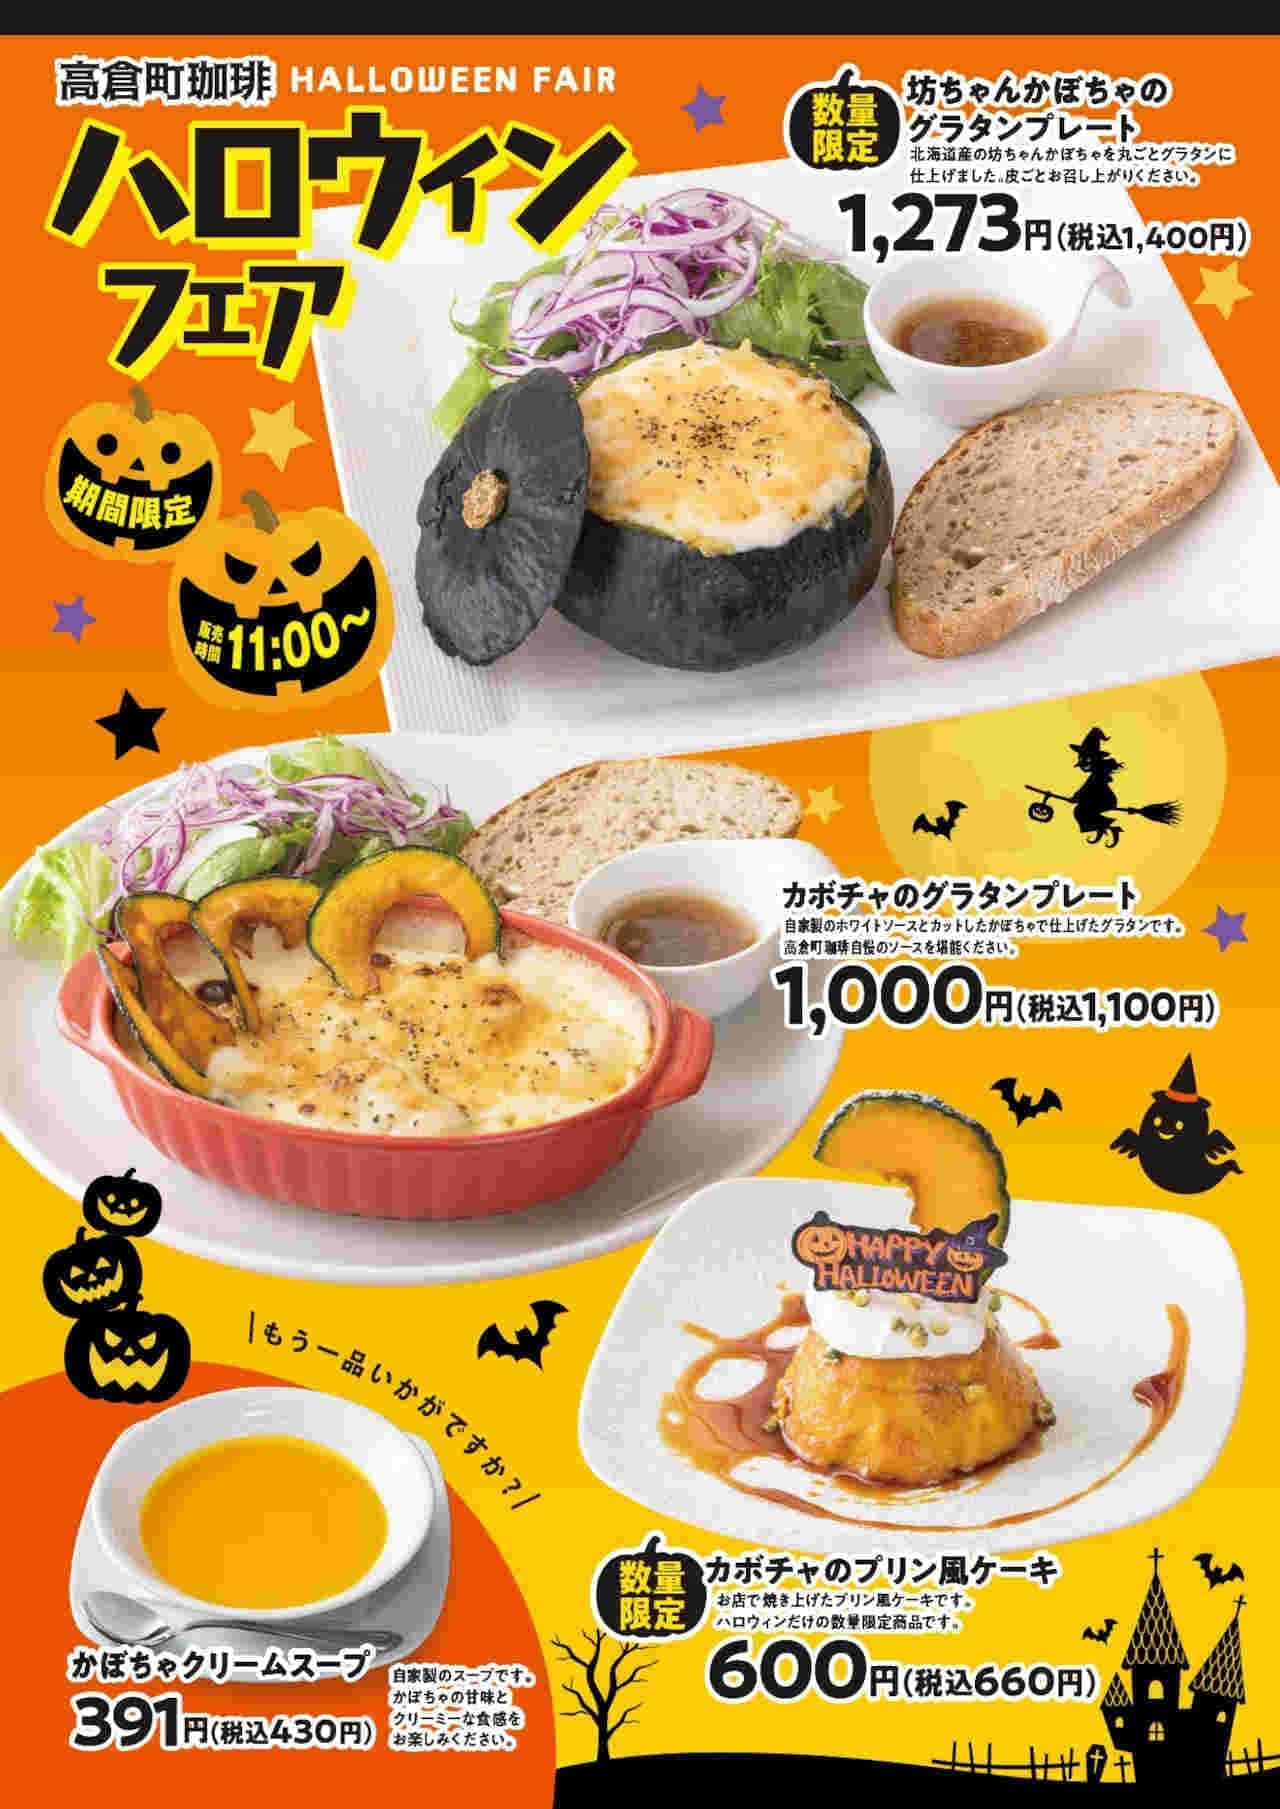 Takakura-cho Coffee "Halloween Fair 